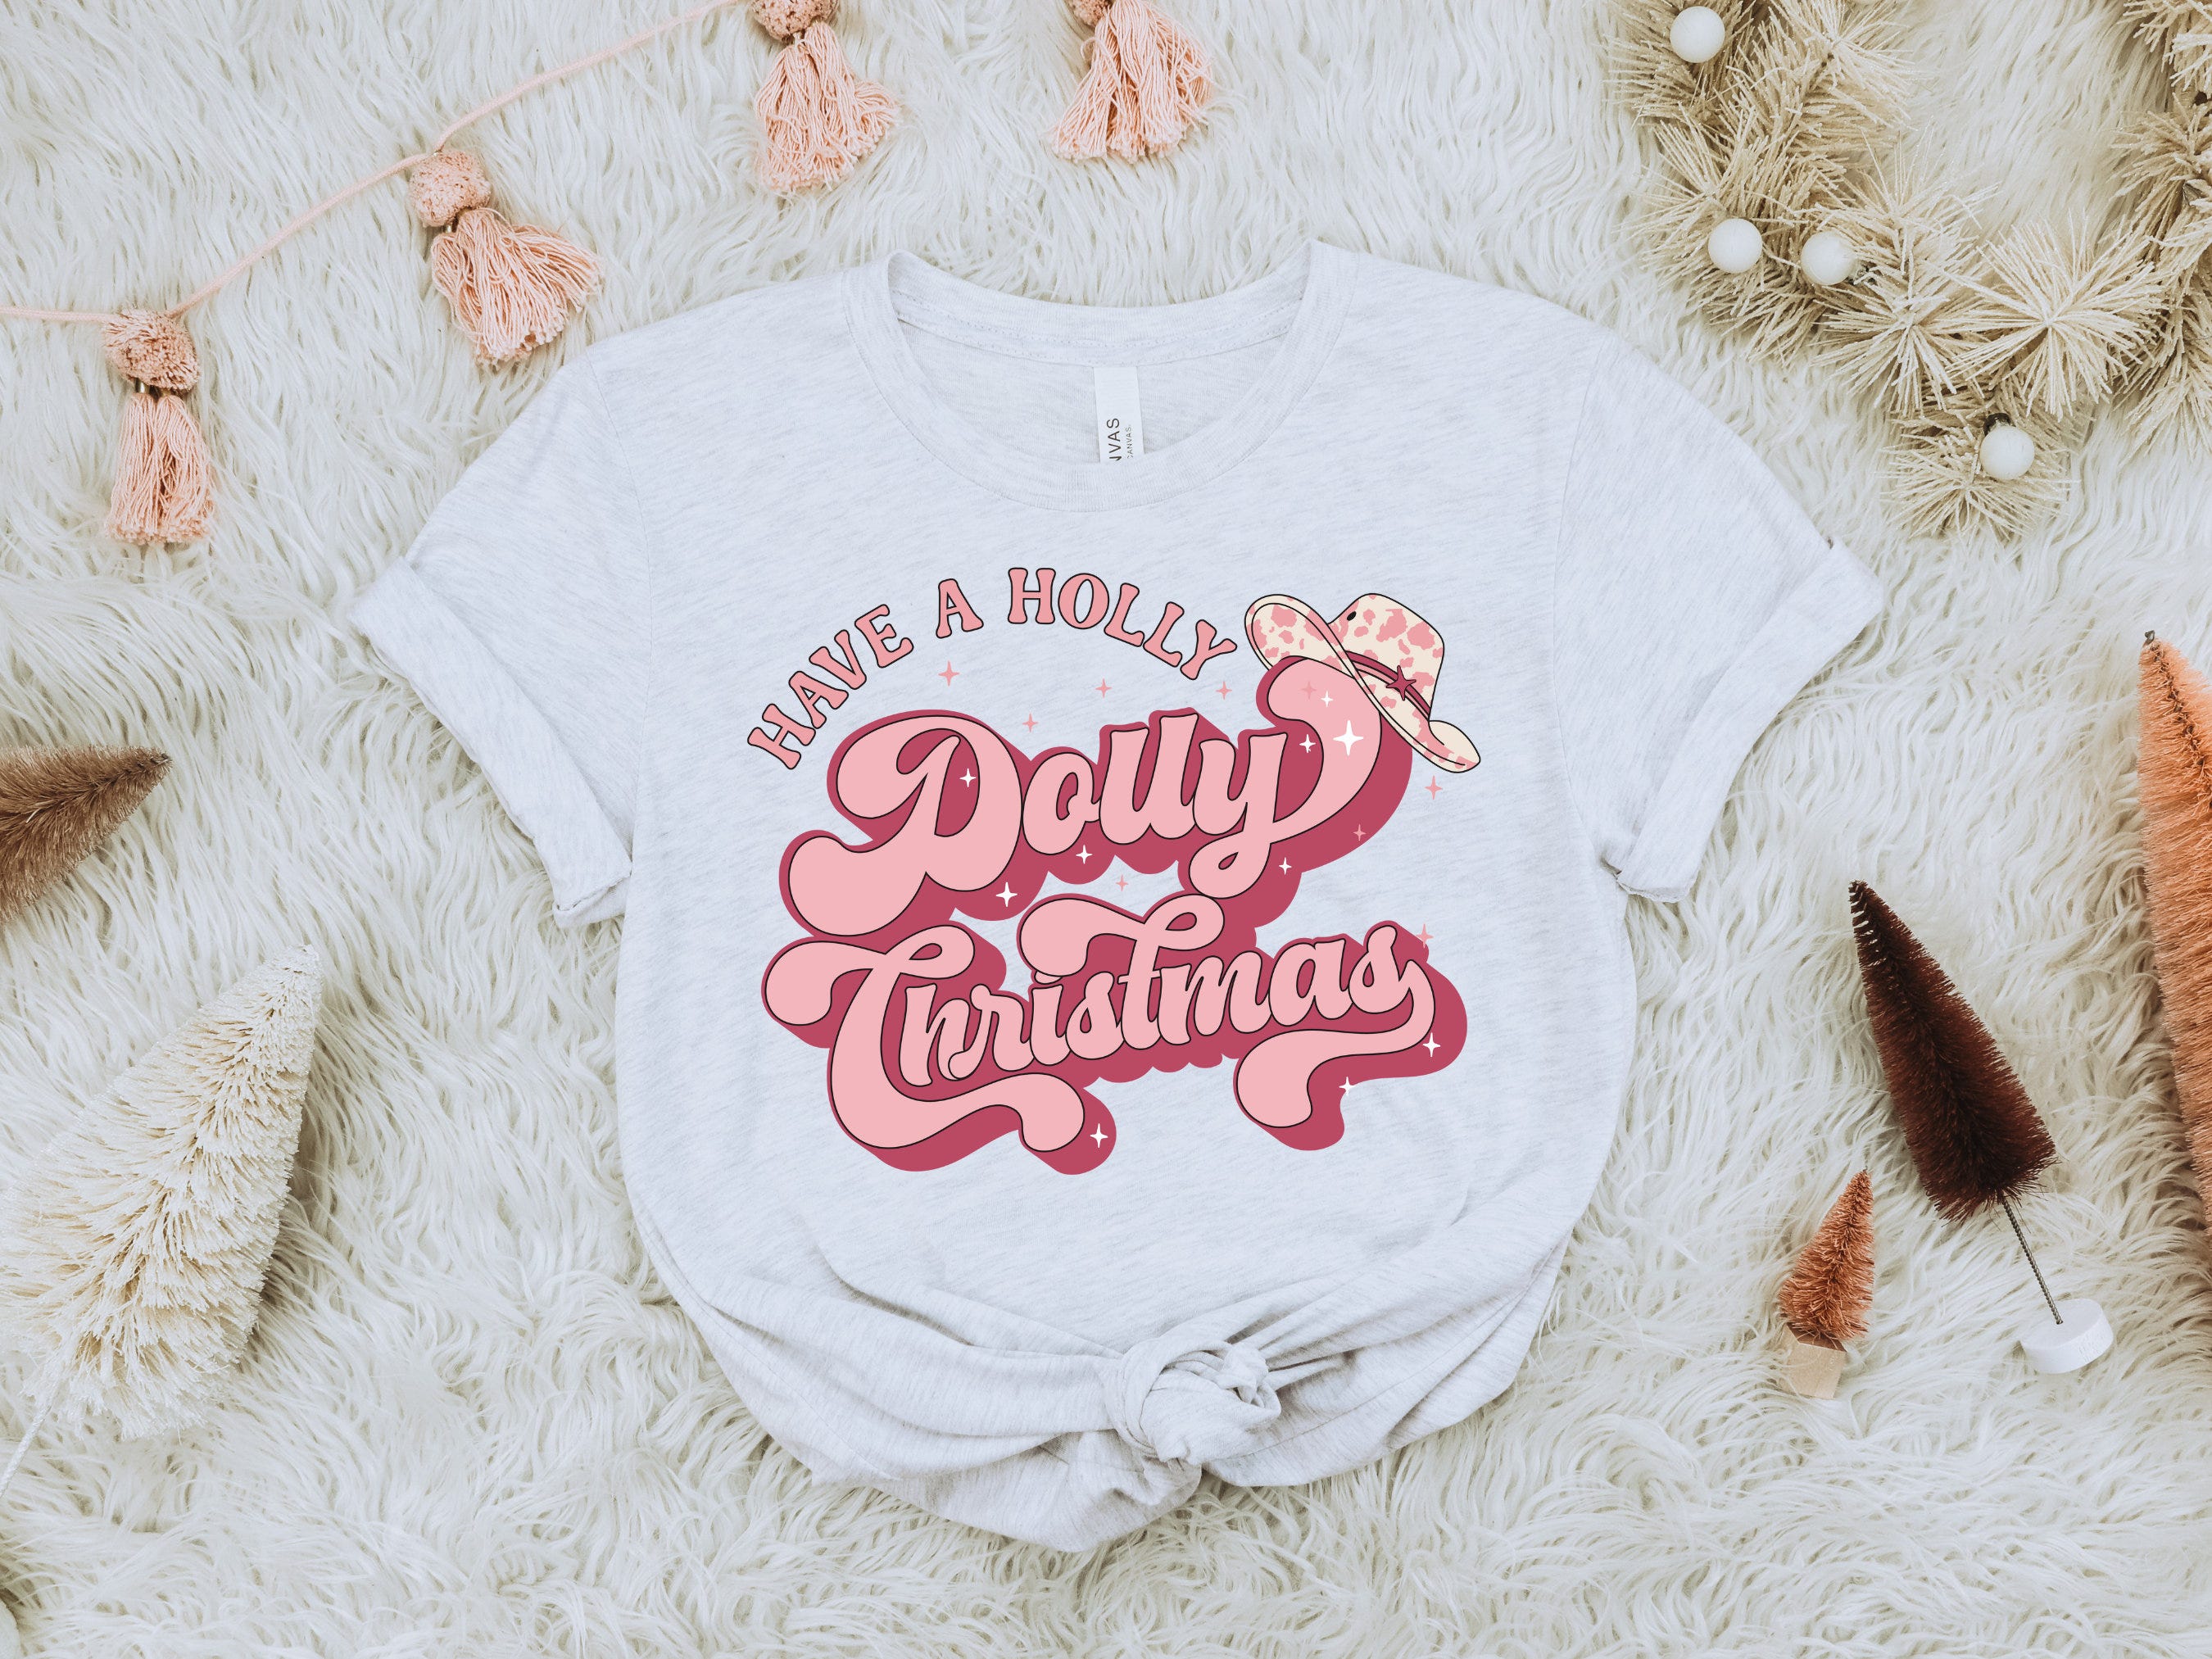 Holly Dolly Christmas Shirt, Retro Country Christmas Tee, Dolly Holiday, Country Christmas Shirt